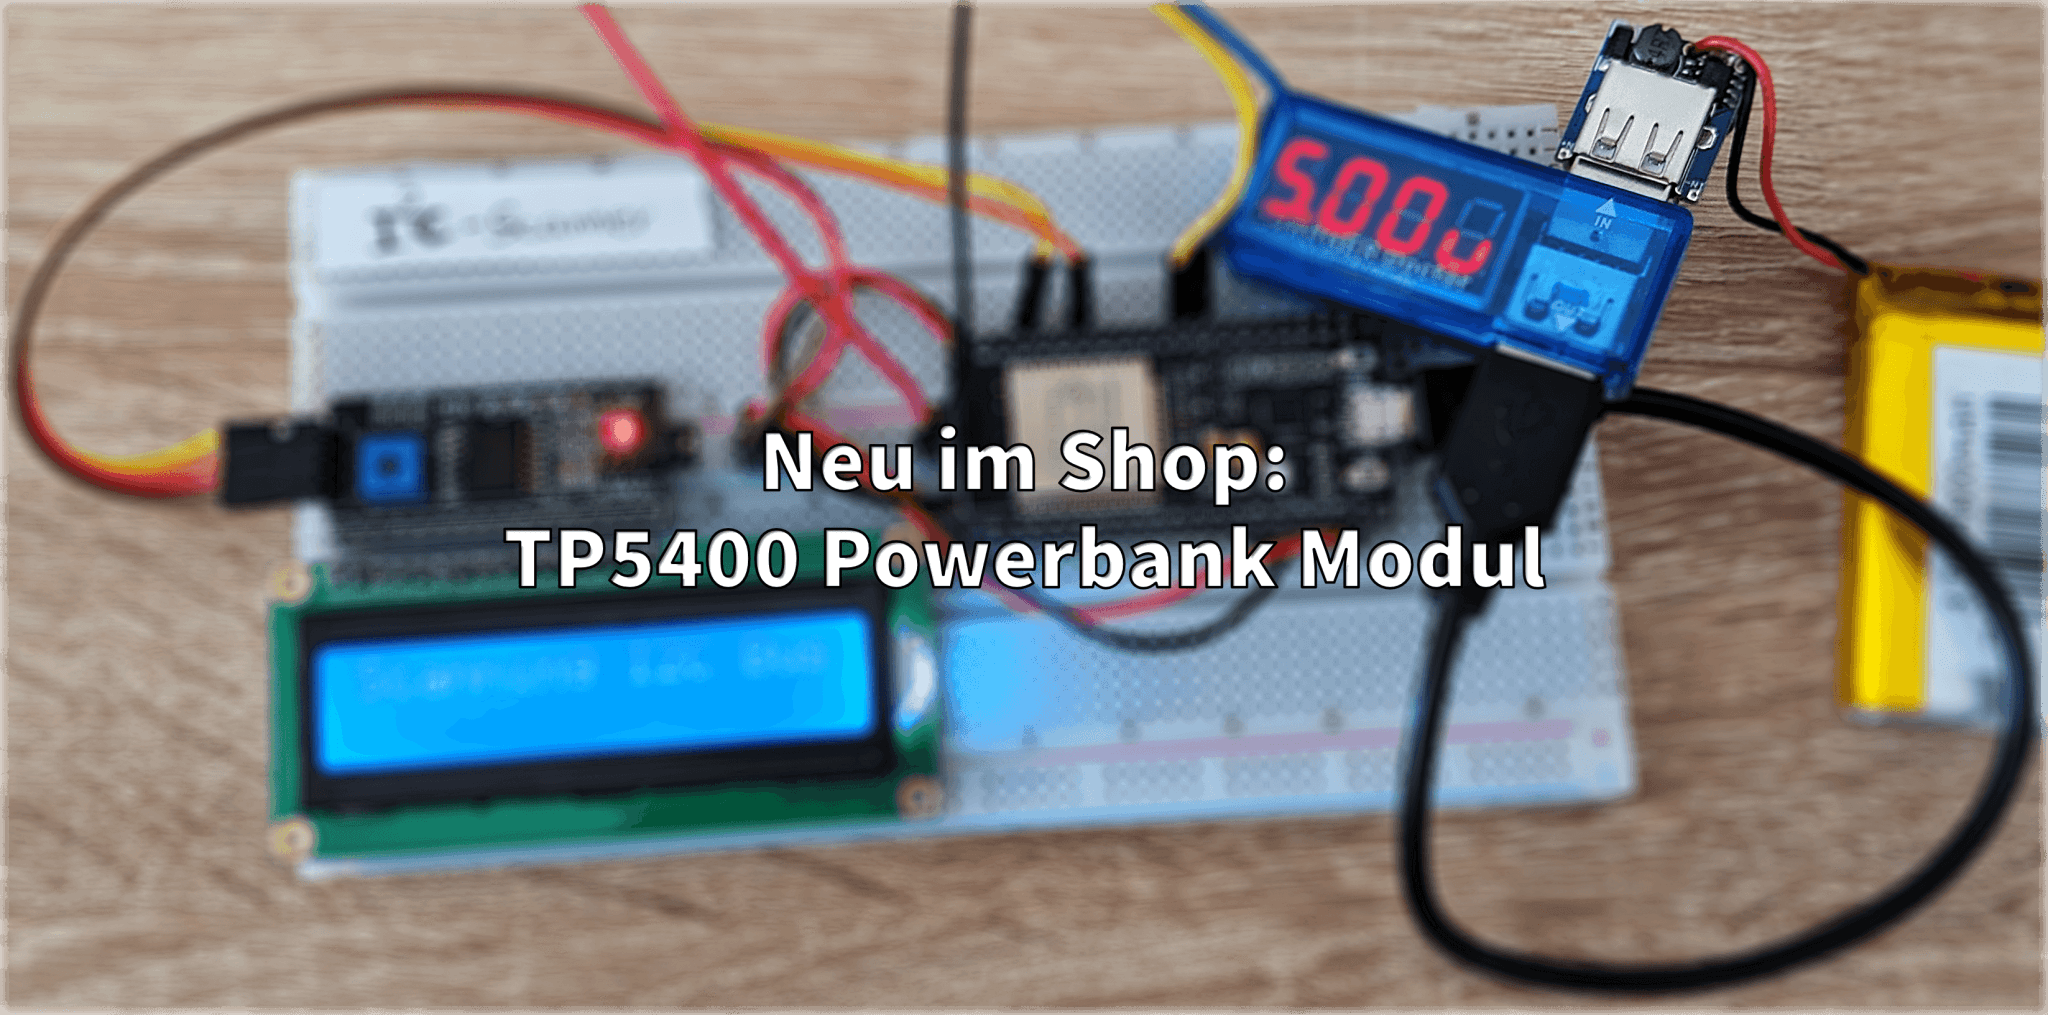 Neu im Shop: TP5400 USB Powerbank Modul - AZ-Delivery